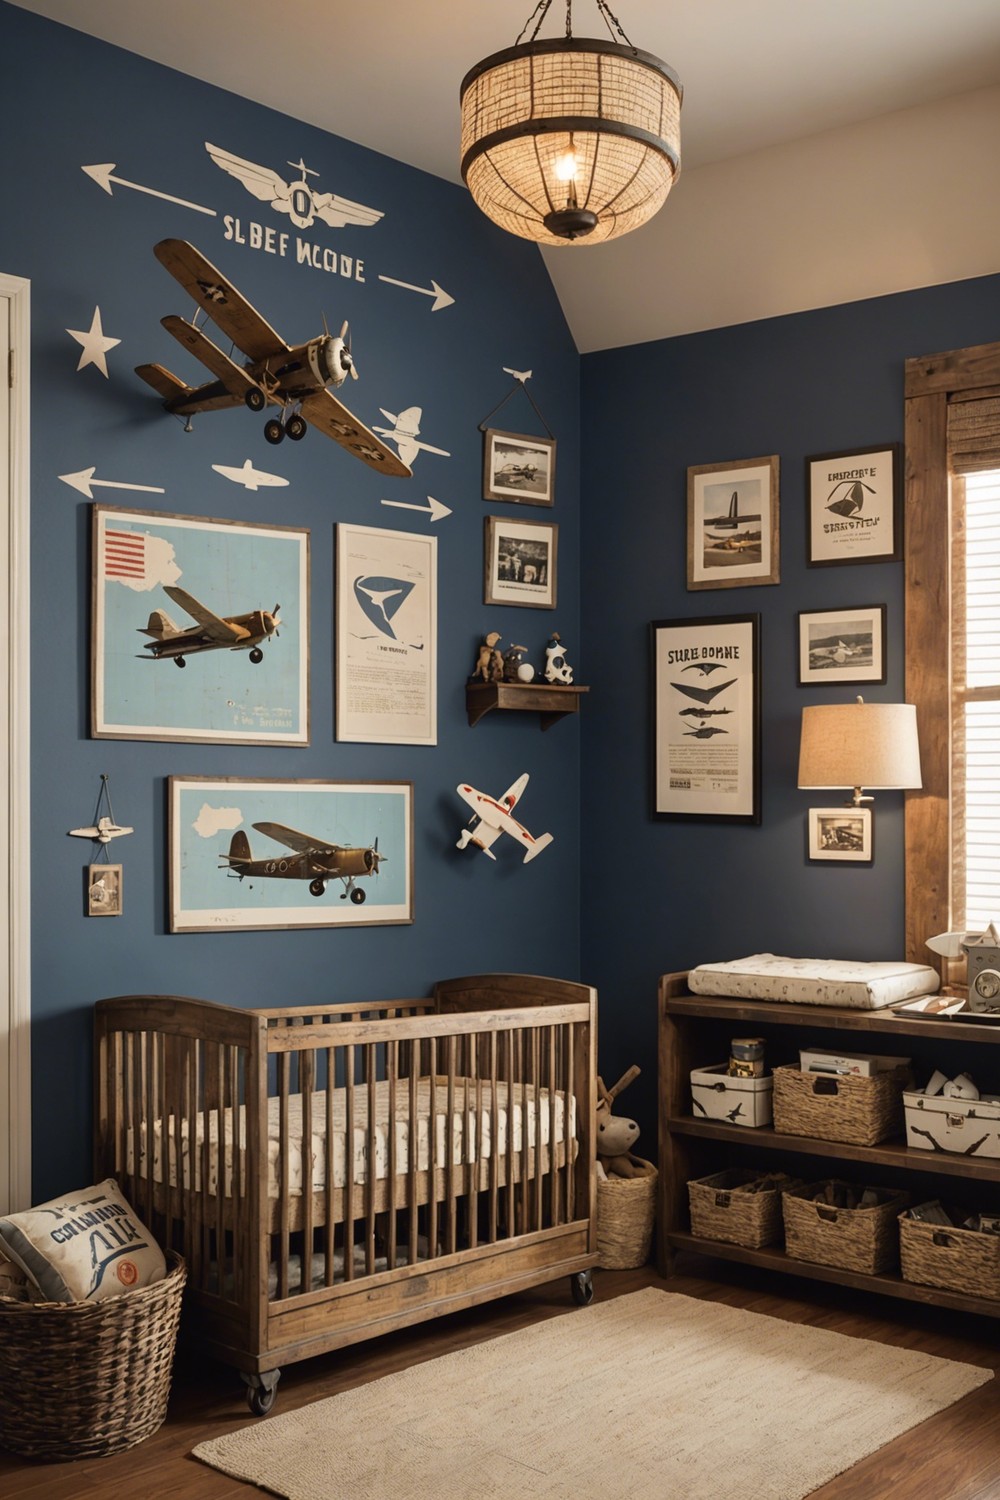 Vintage Airplane Decor for a Unique Nursery